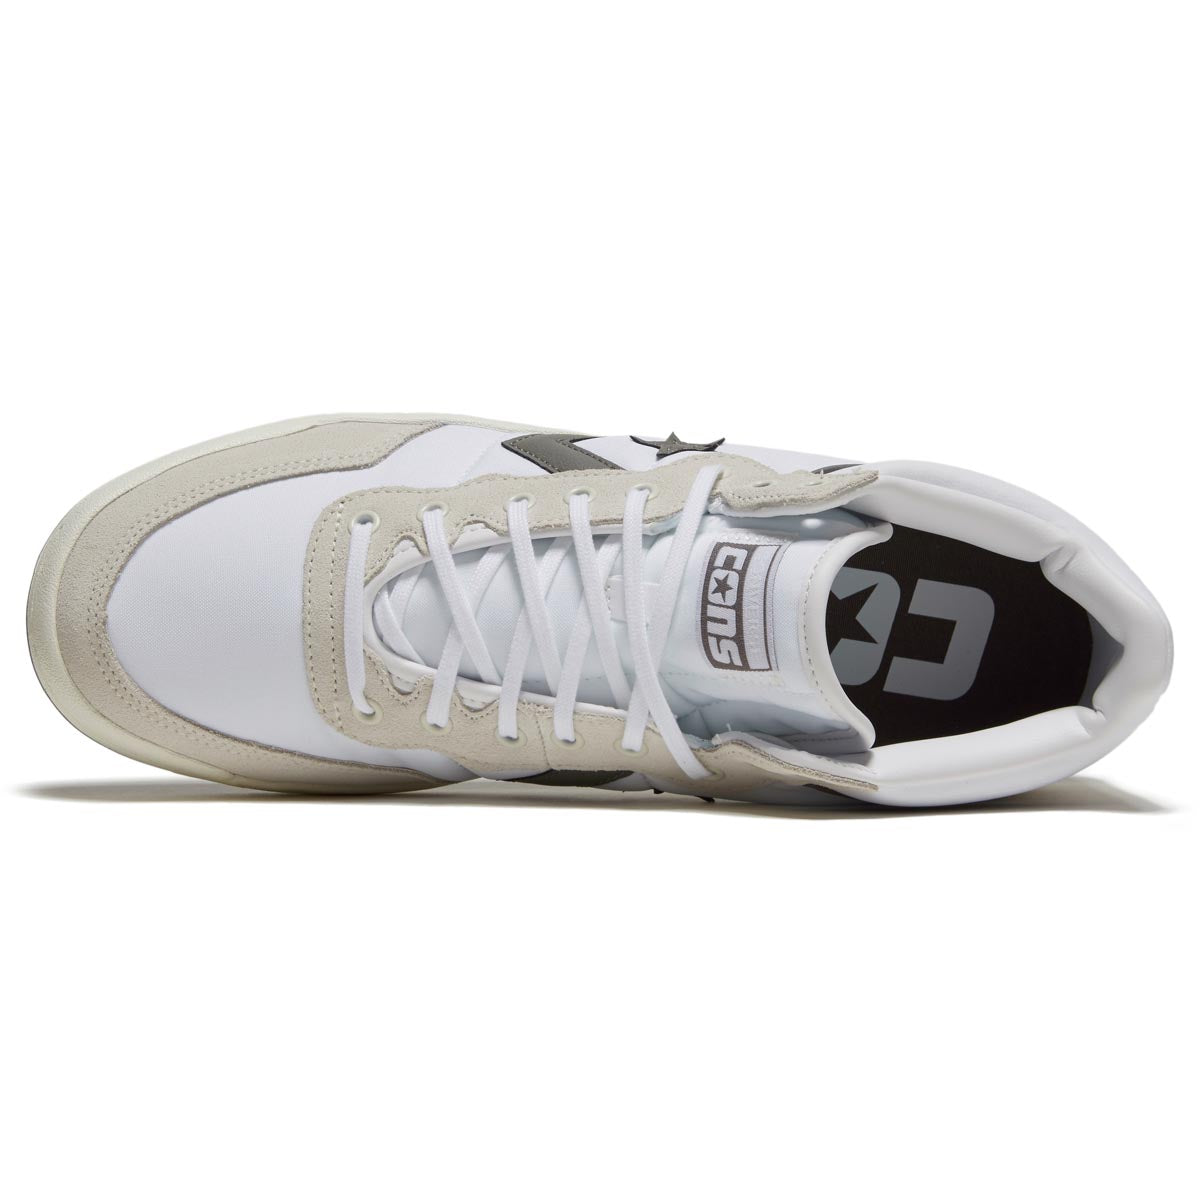 Converse Fastbreak Pro Suede Nylon Mid Shoes - White/Vaporous Gray image 3